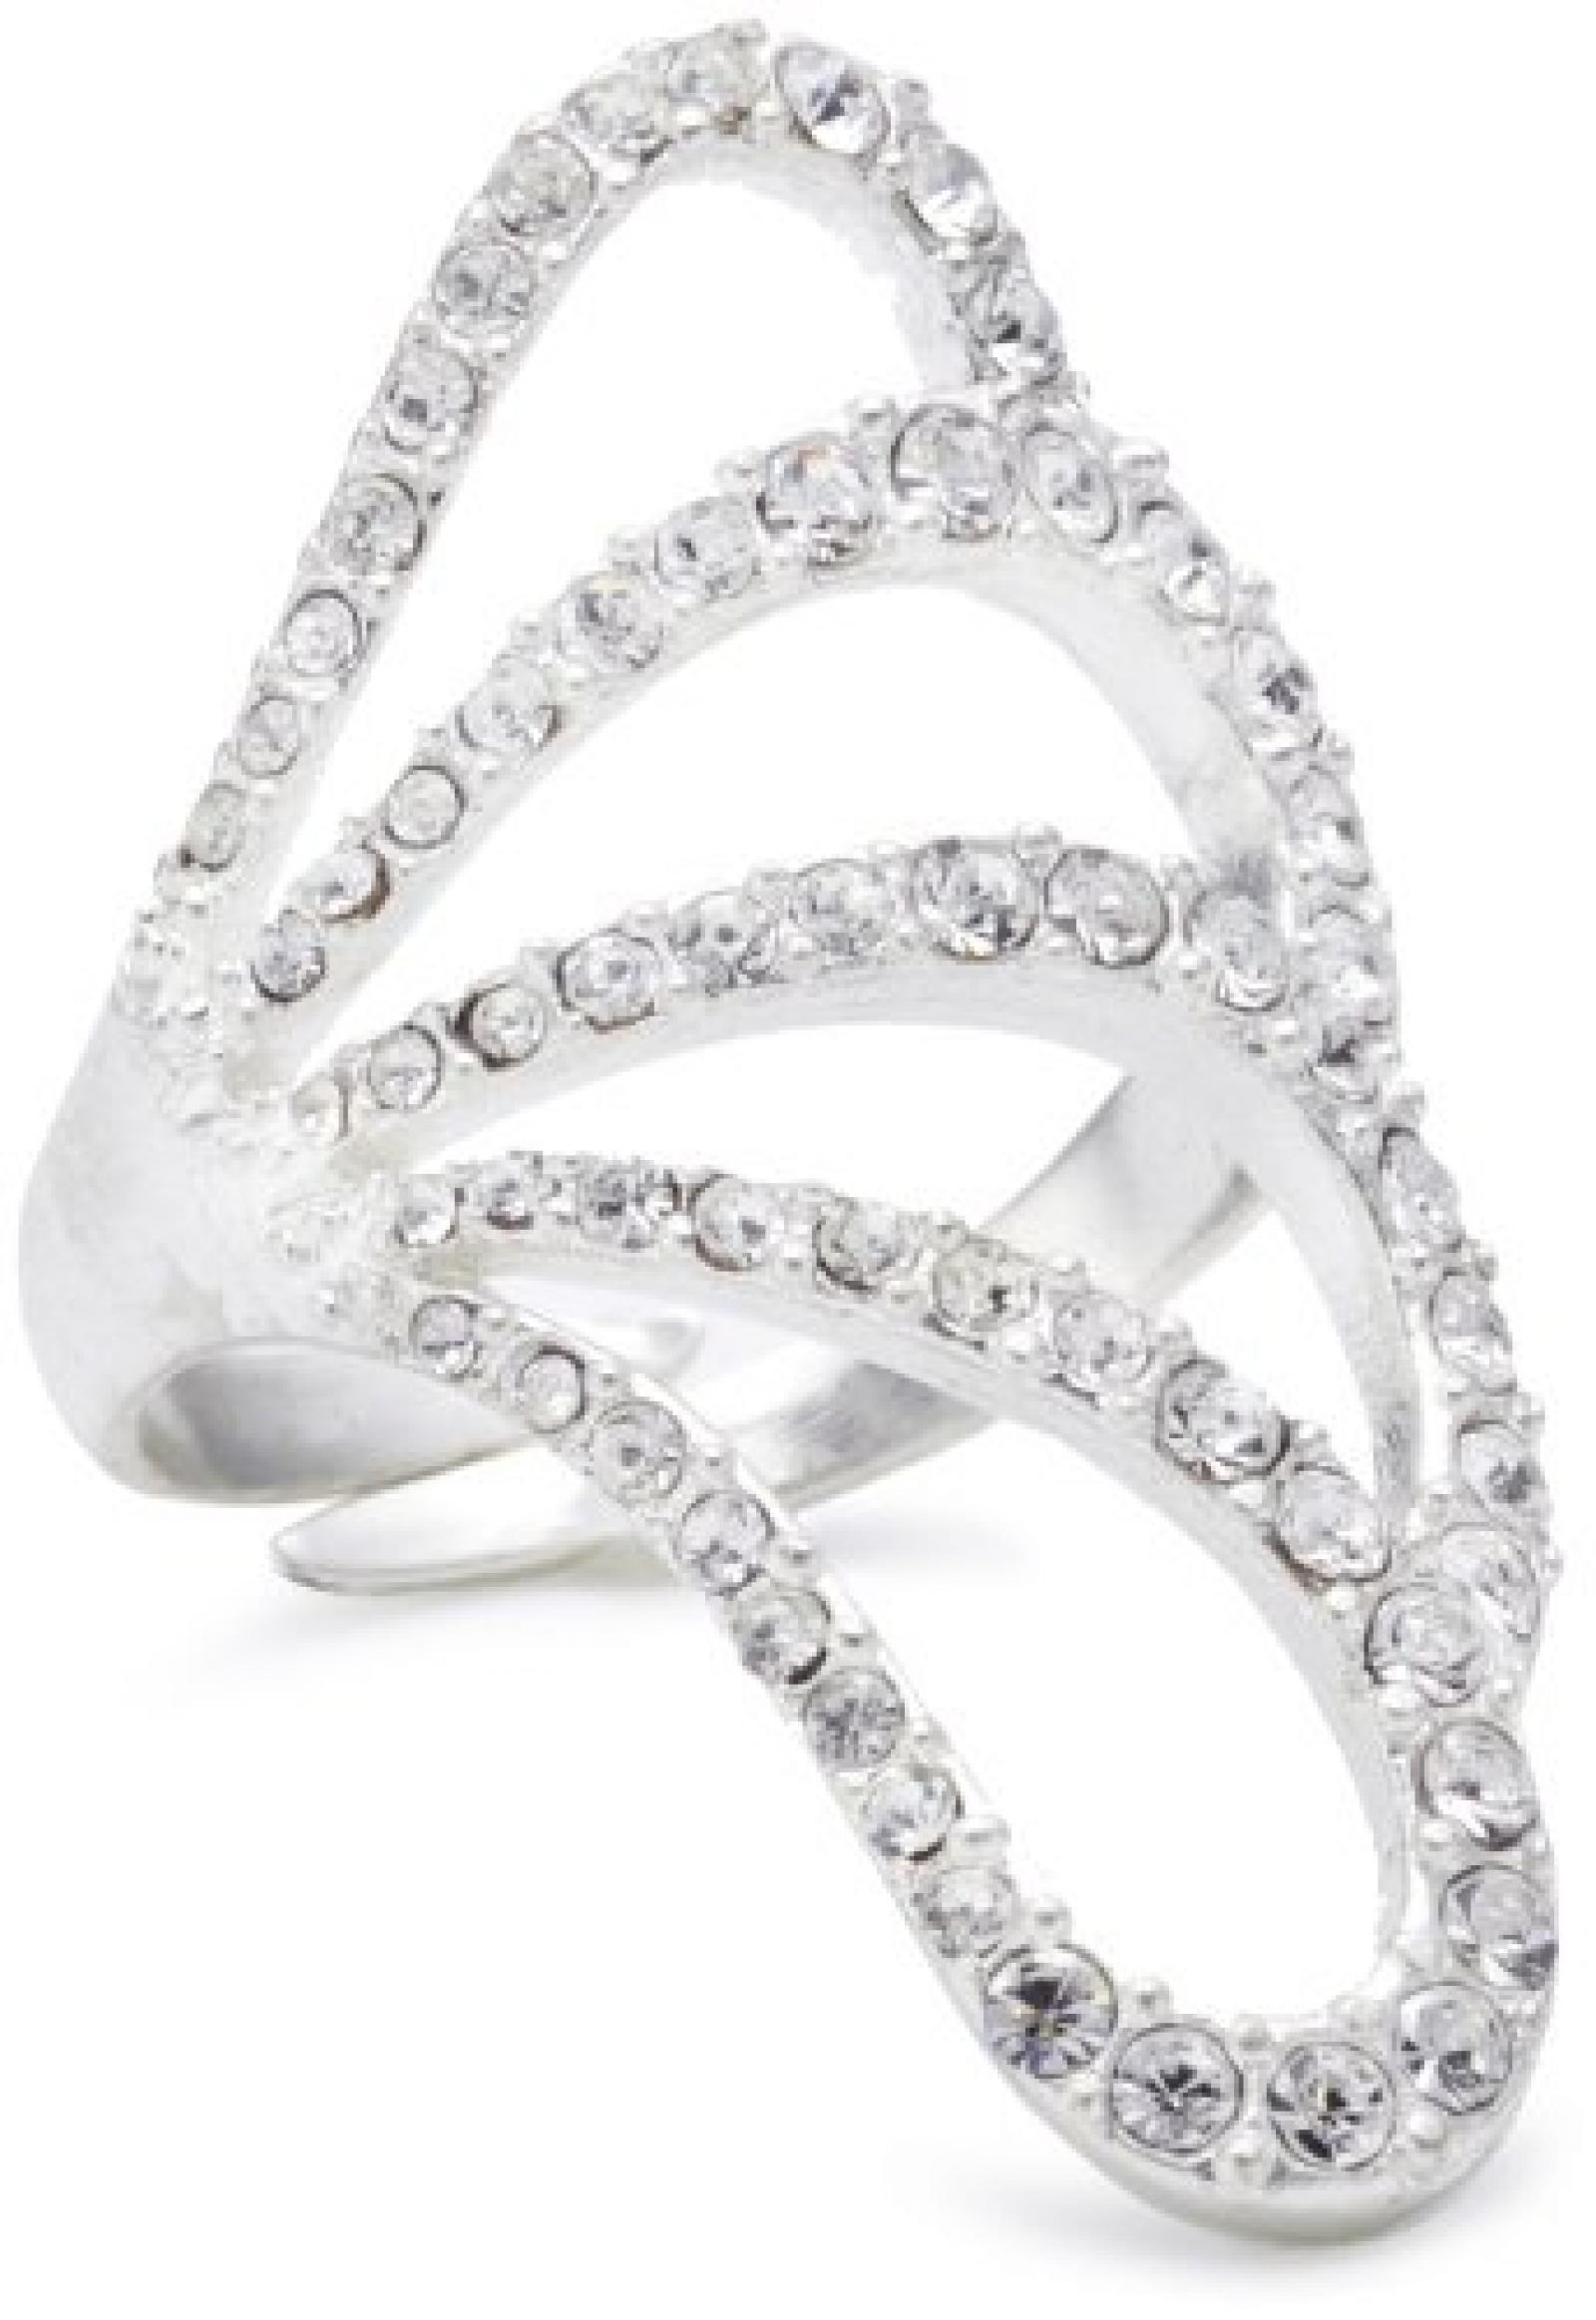 Pilgrim Jewelry Damen-Ring aus der Serie Big rings versilbert kristall verstellbar 3.2 cm 241235014 größenverstellbar 